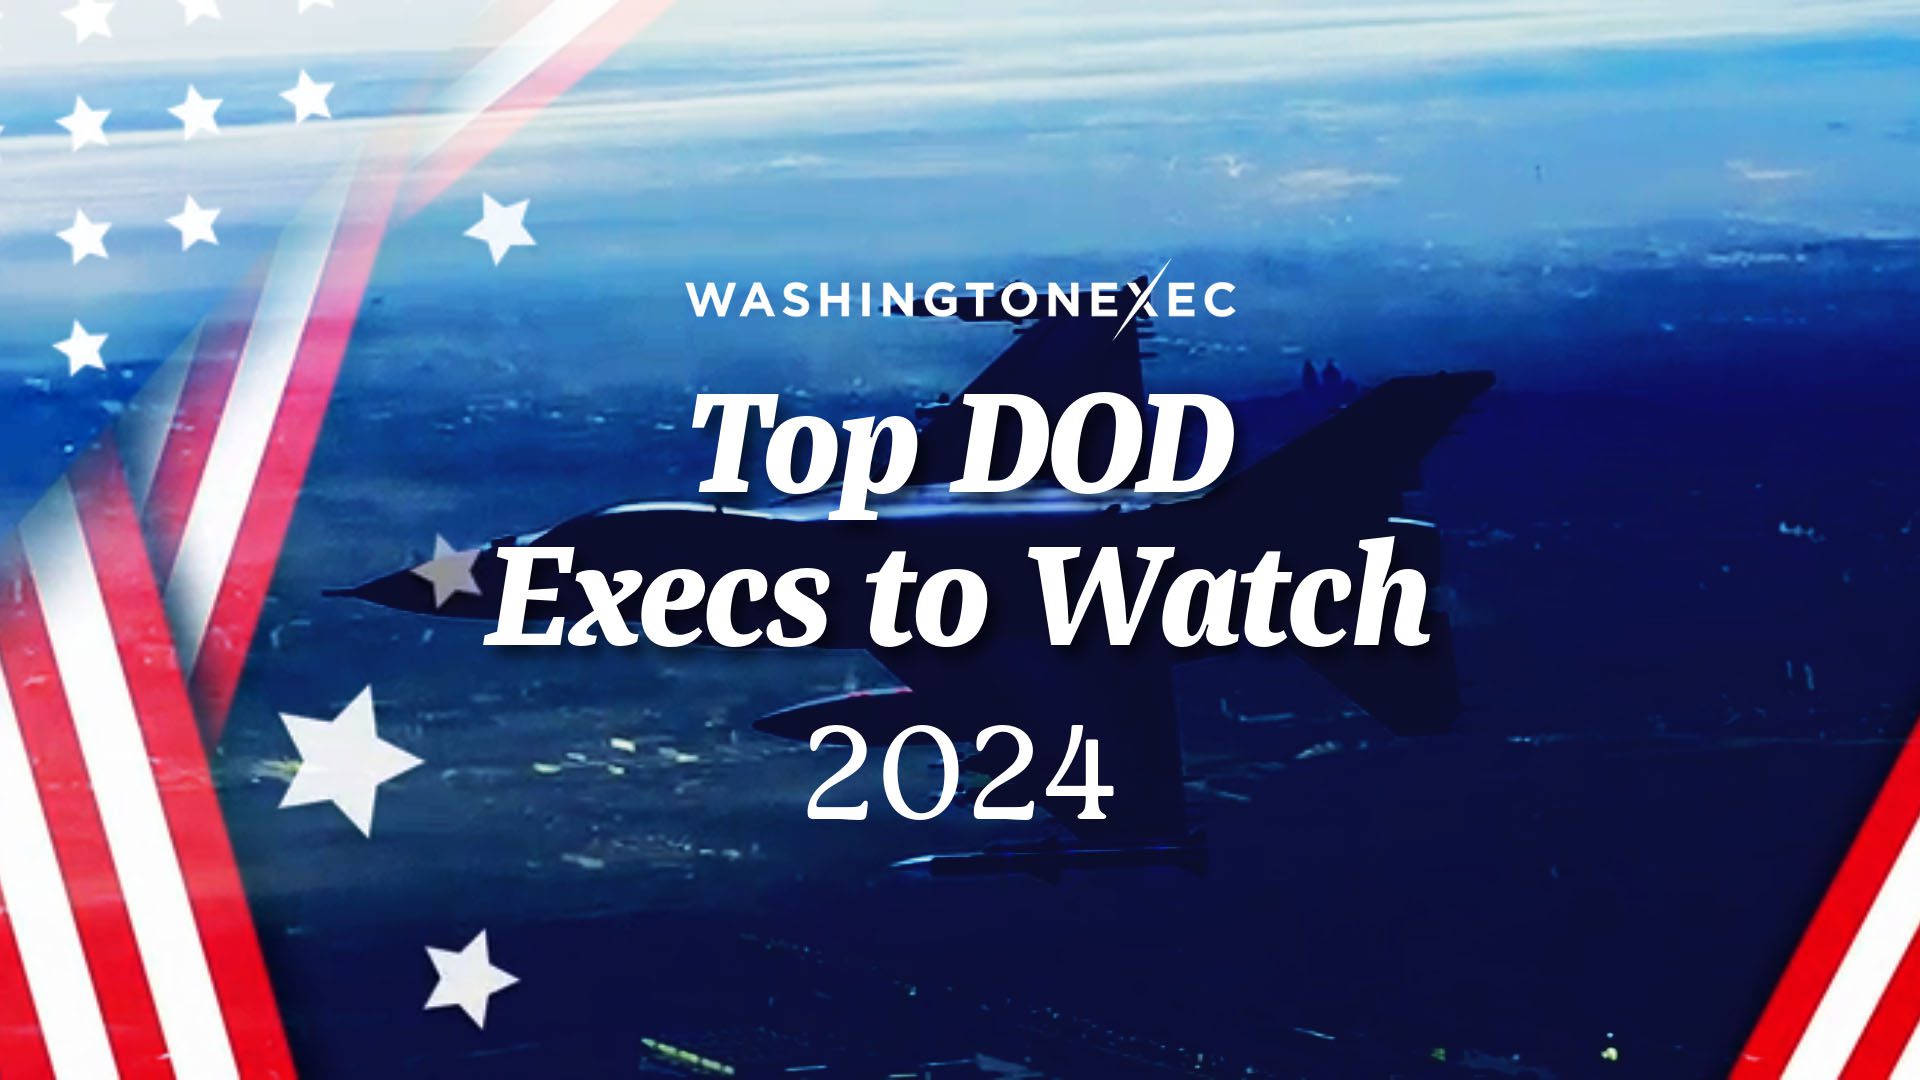 Top DOD Execs to Watch in 2024